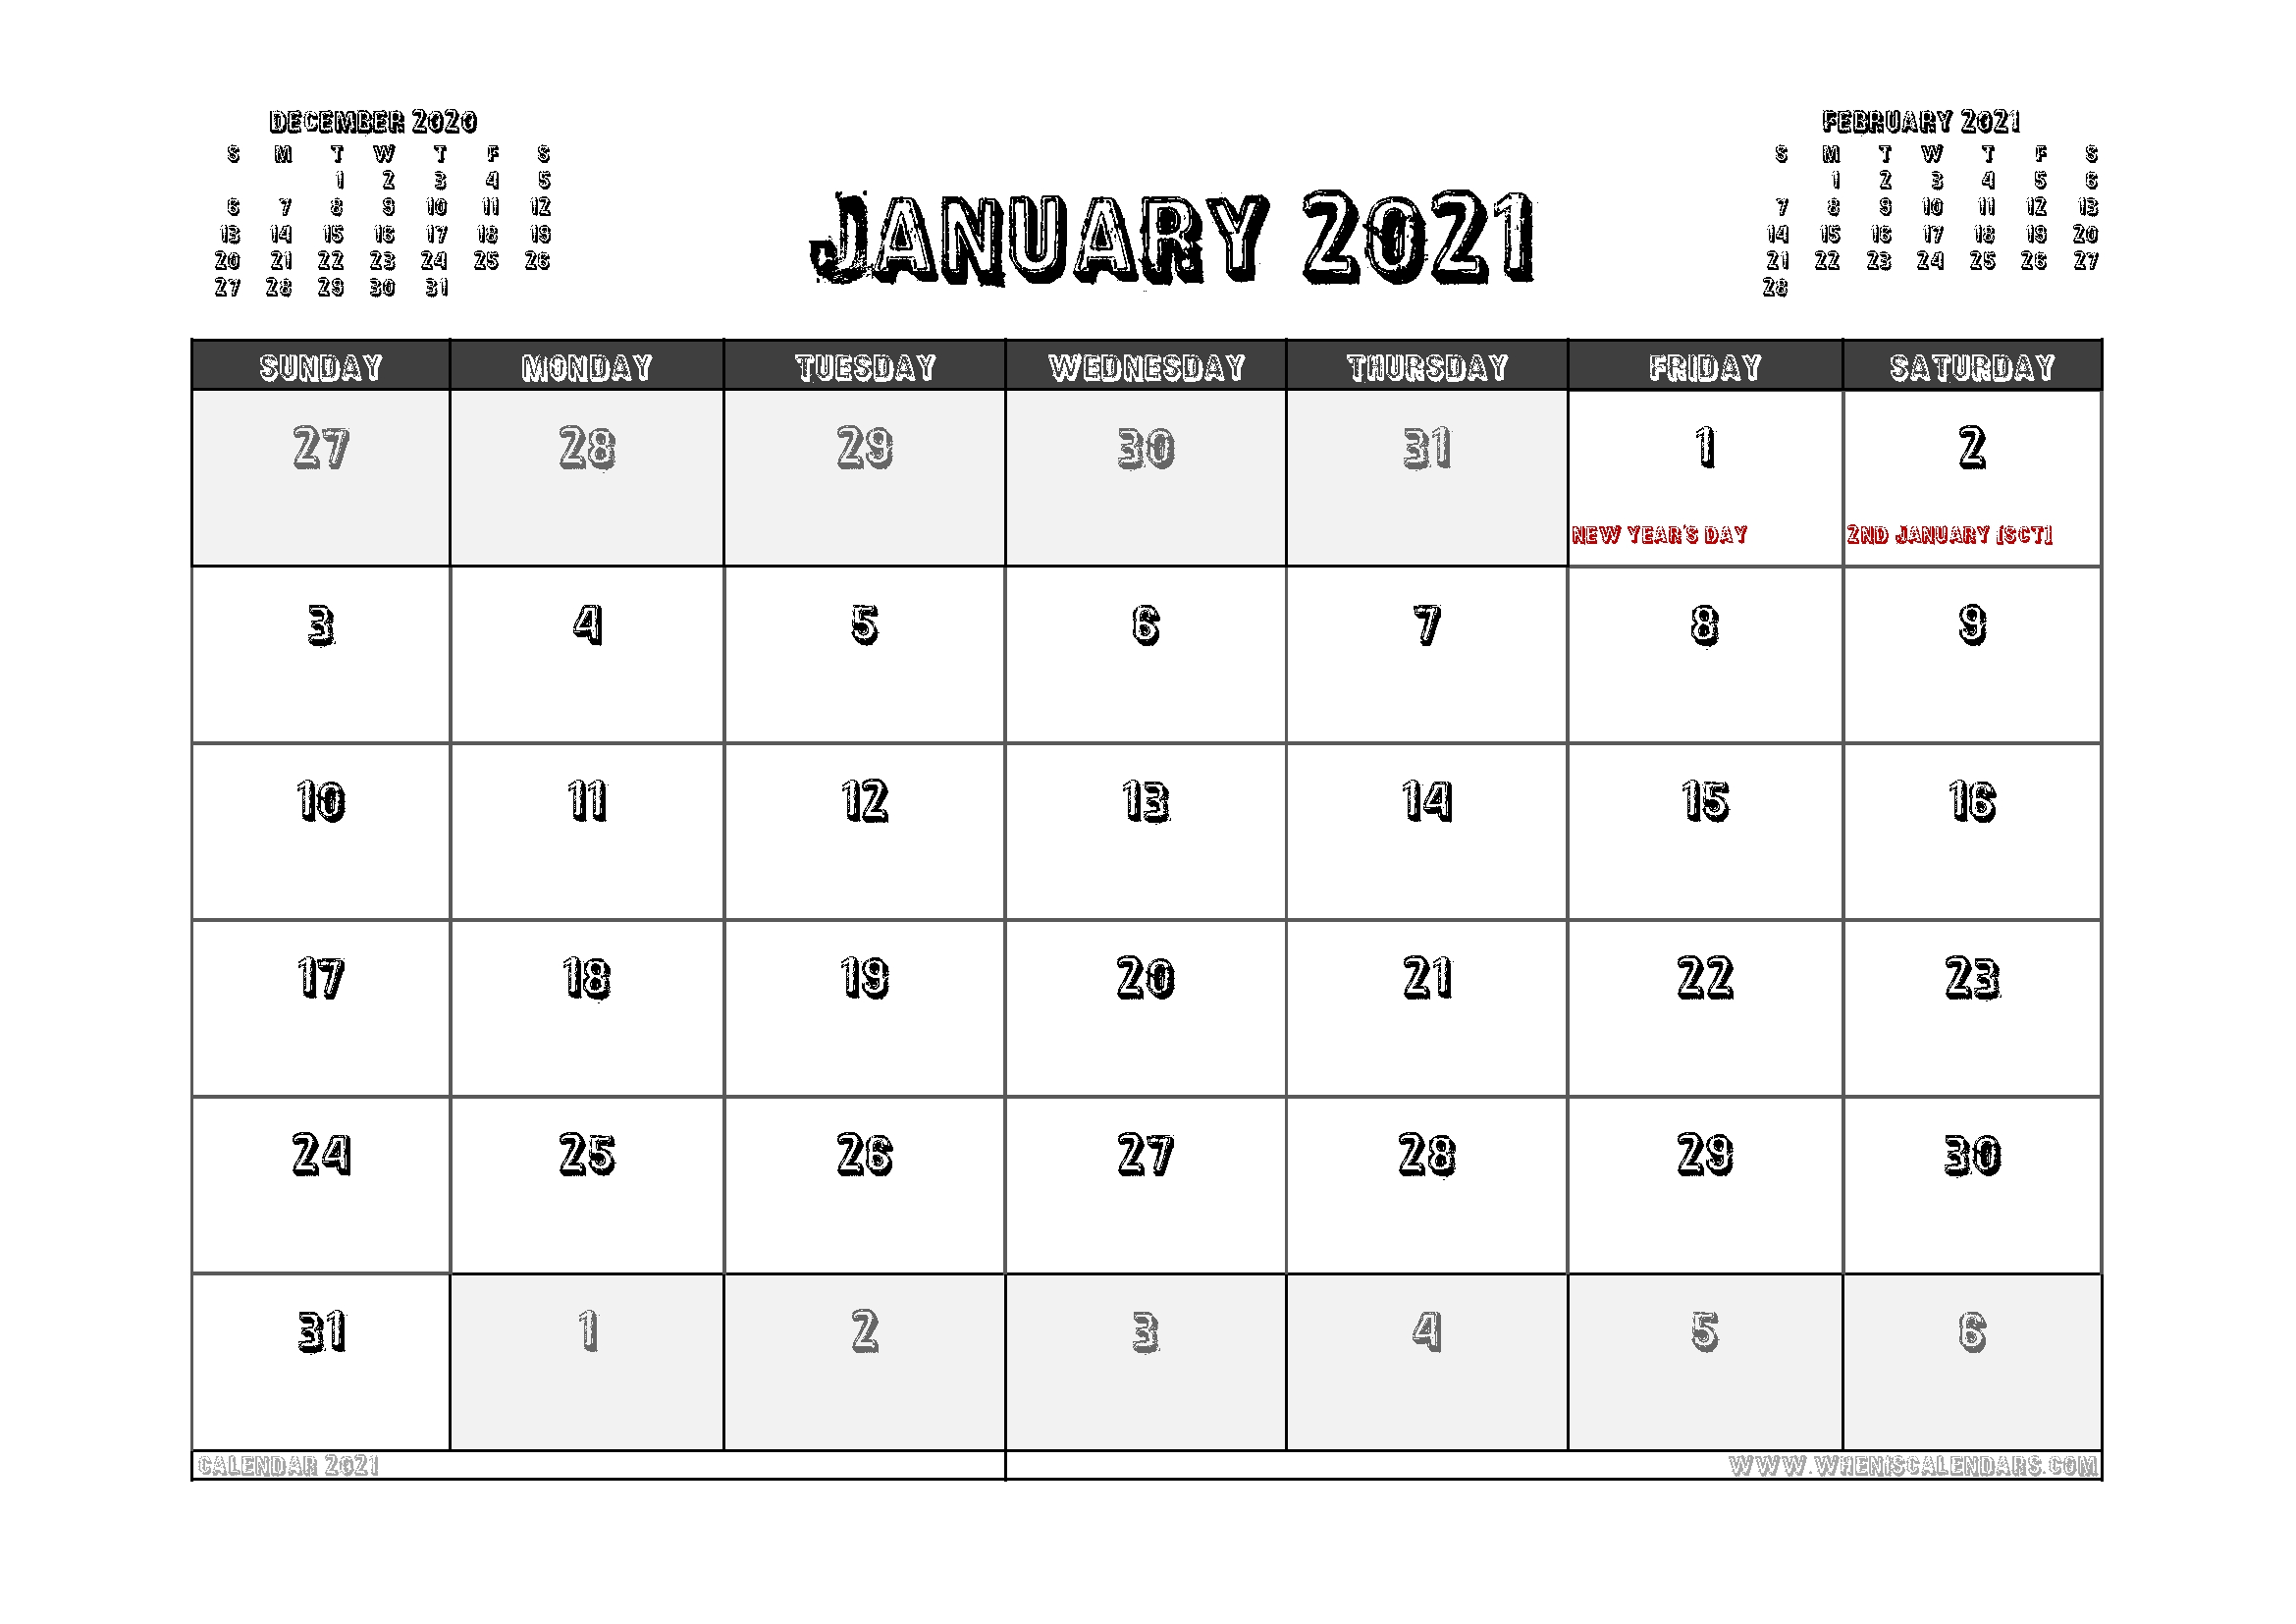 Collect Free Printable Calendar 2021 Australia